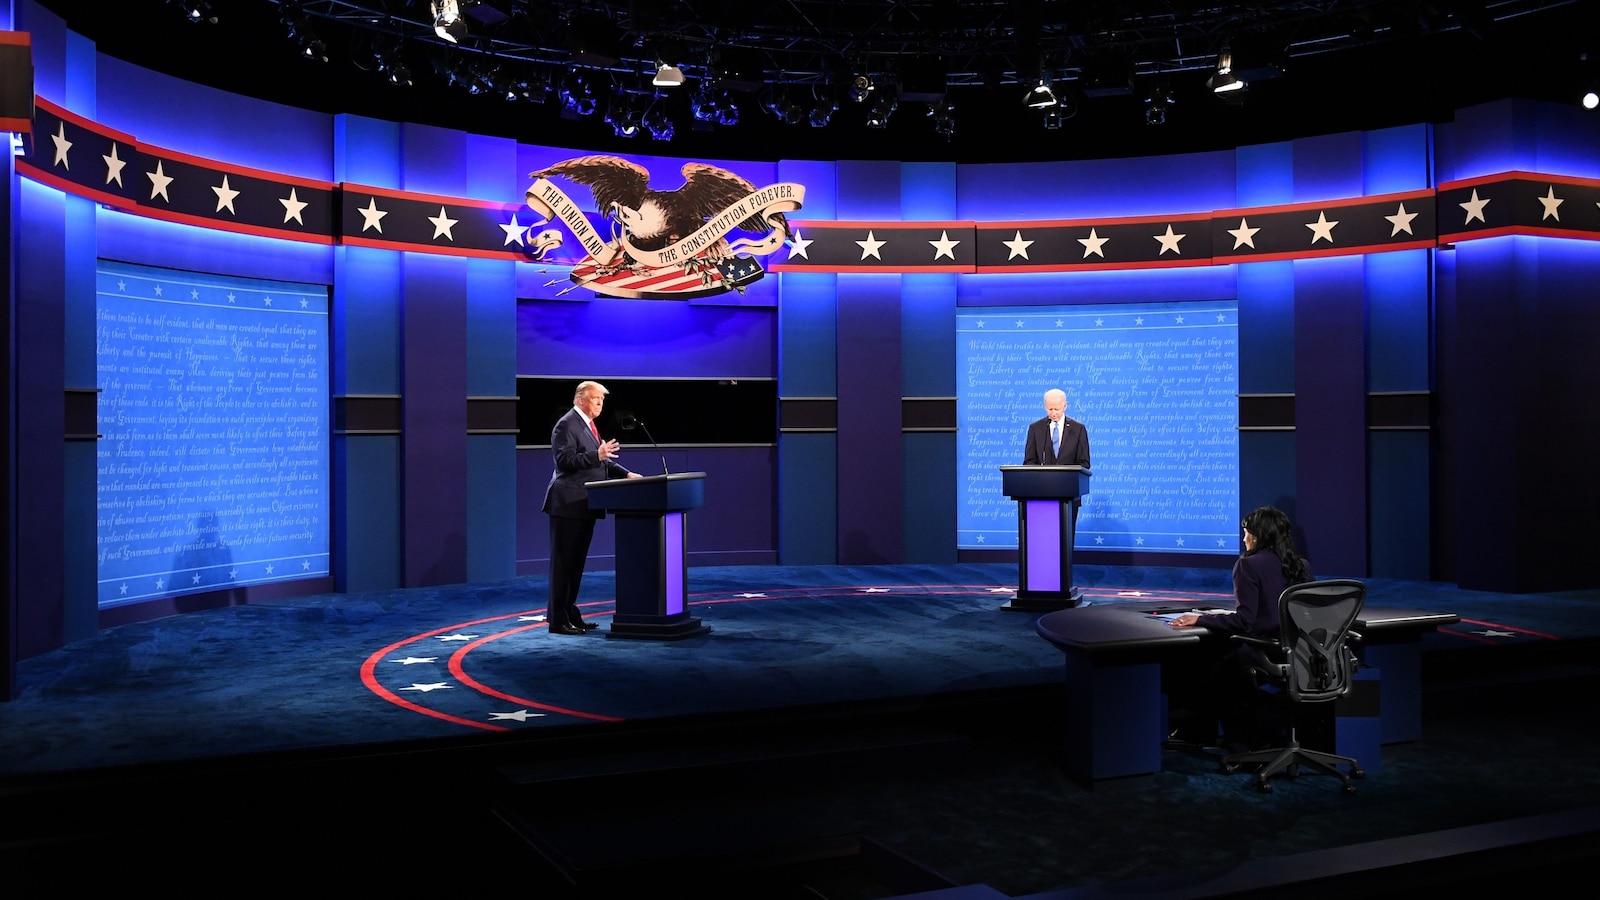 BidenTrump debate offers rare chance for change in stubbornly tight